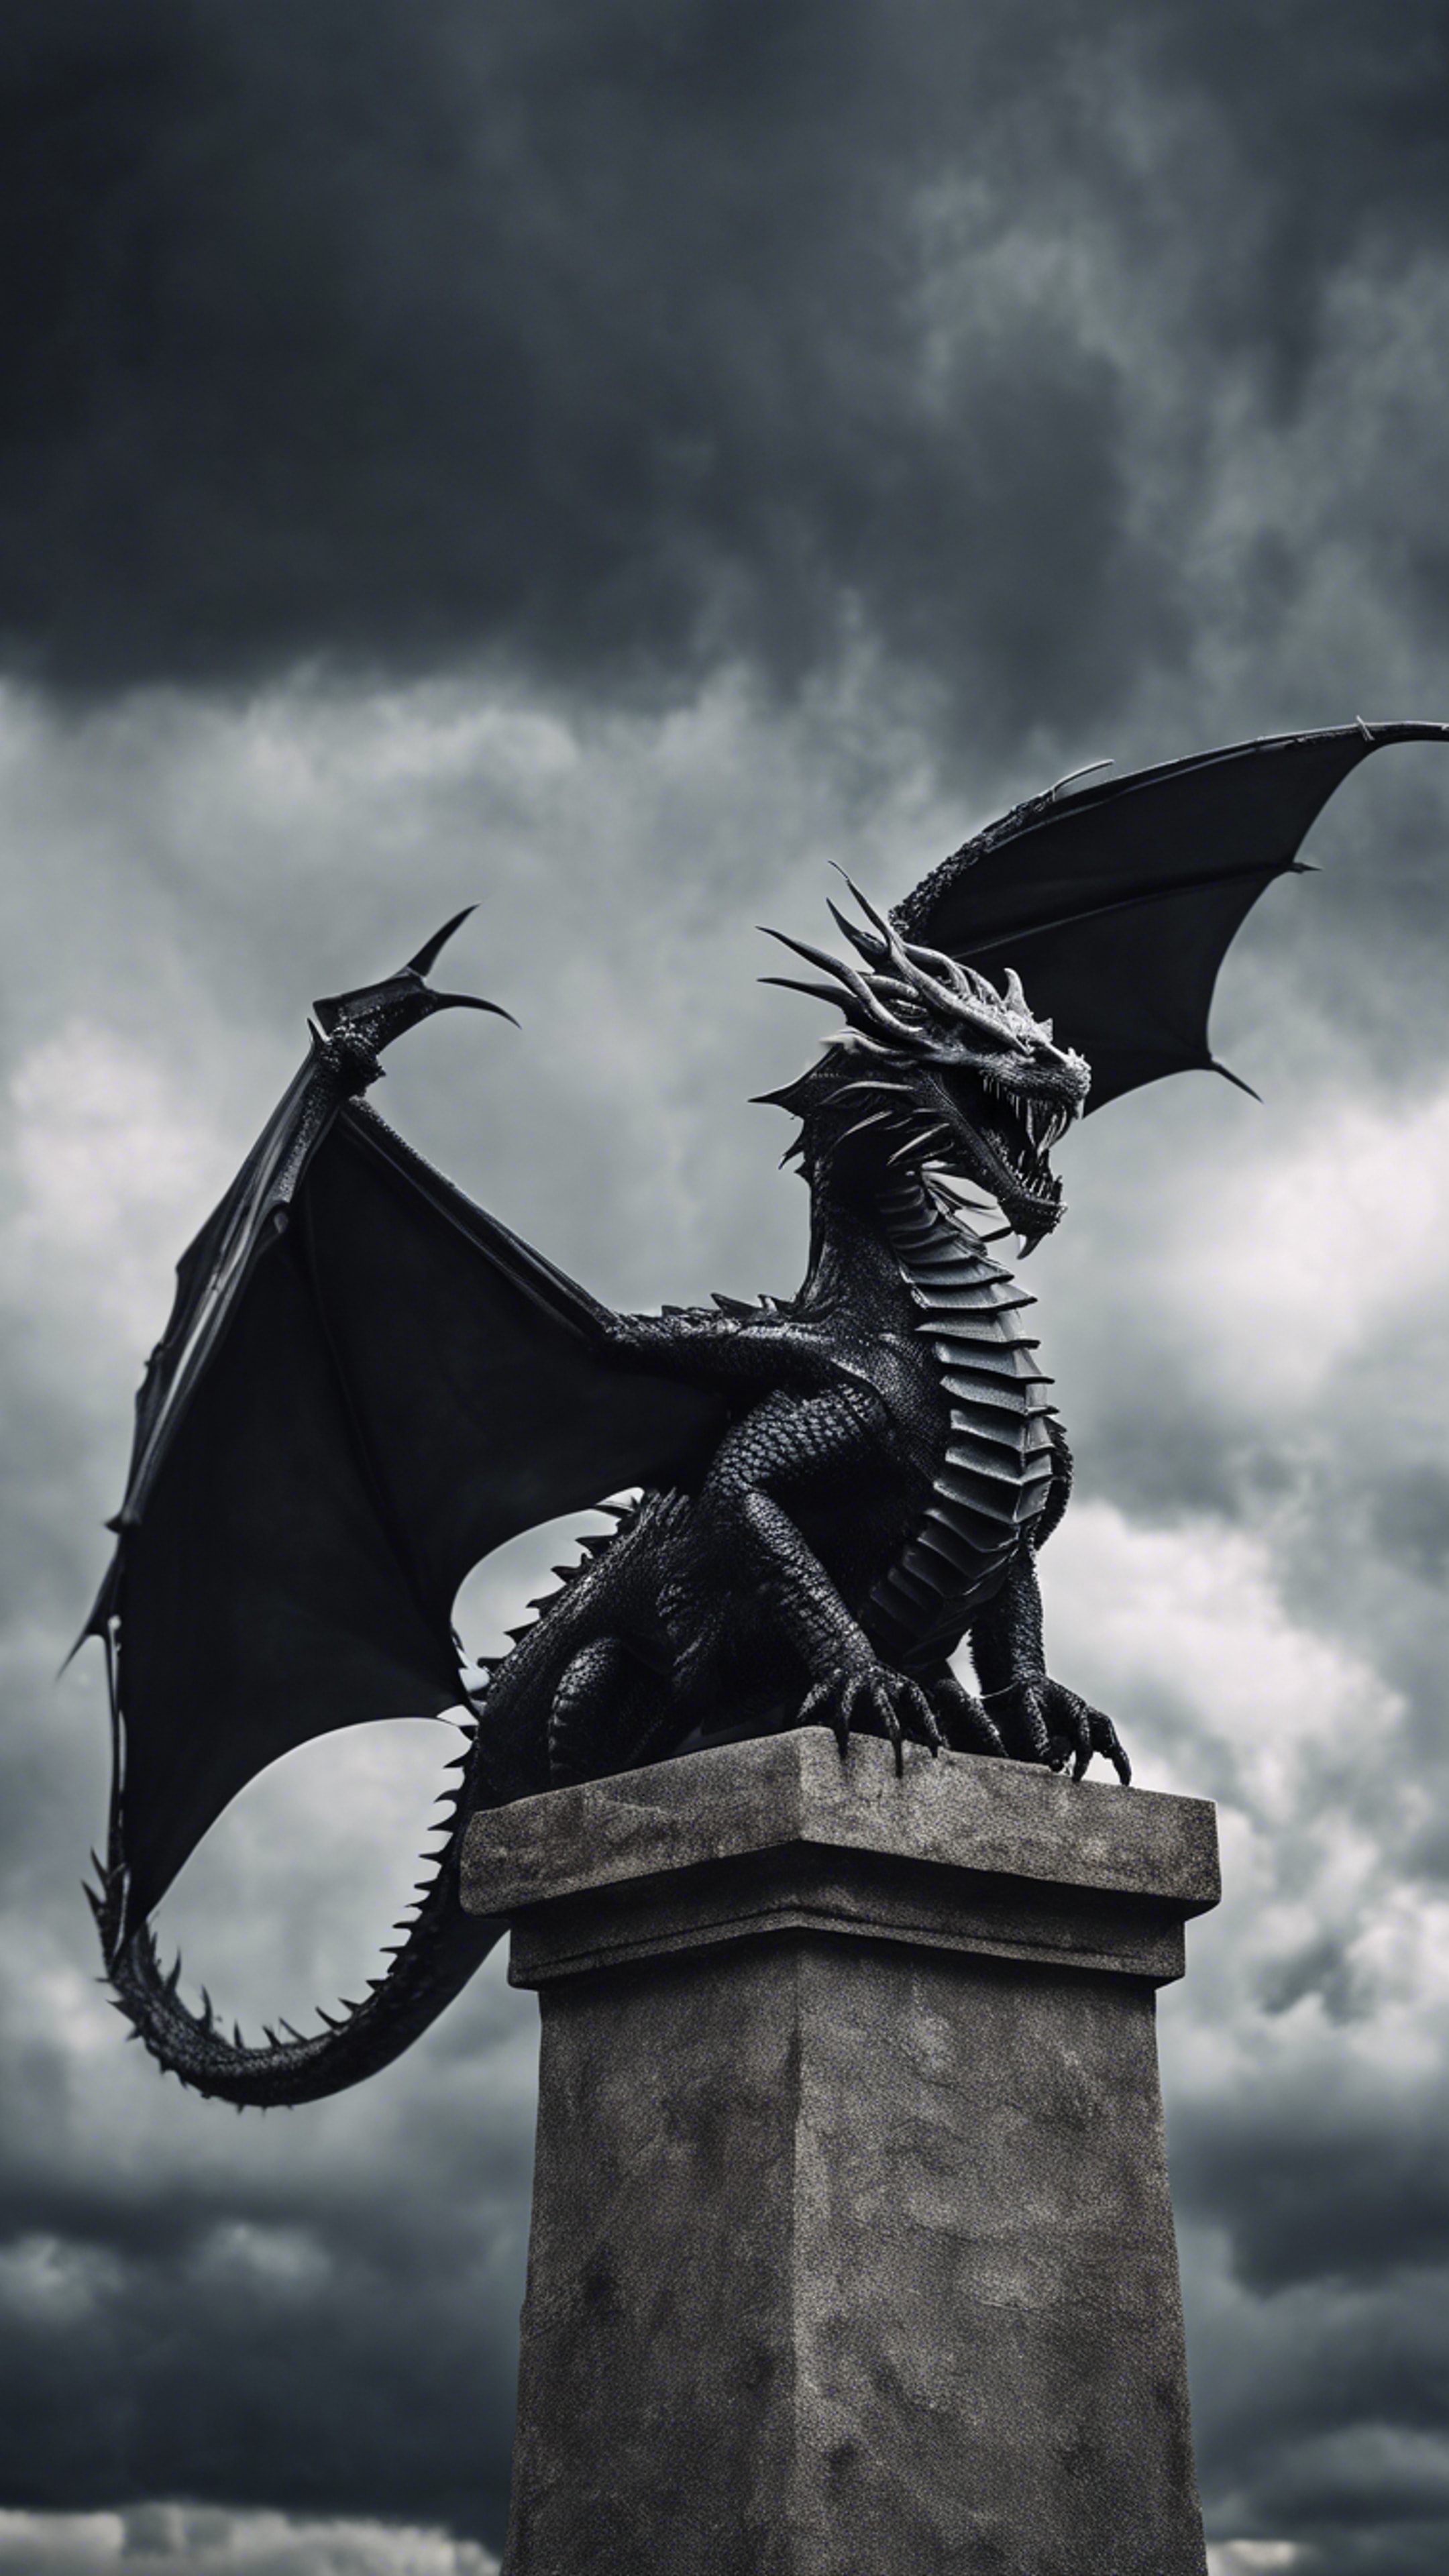 A gothic-style, black iron dragon flying amidst stormy, dark clouds. Fond d'écran[aebeaee8cf654a26baba]